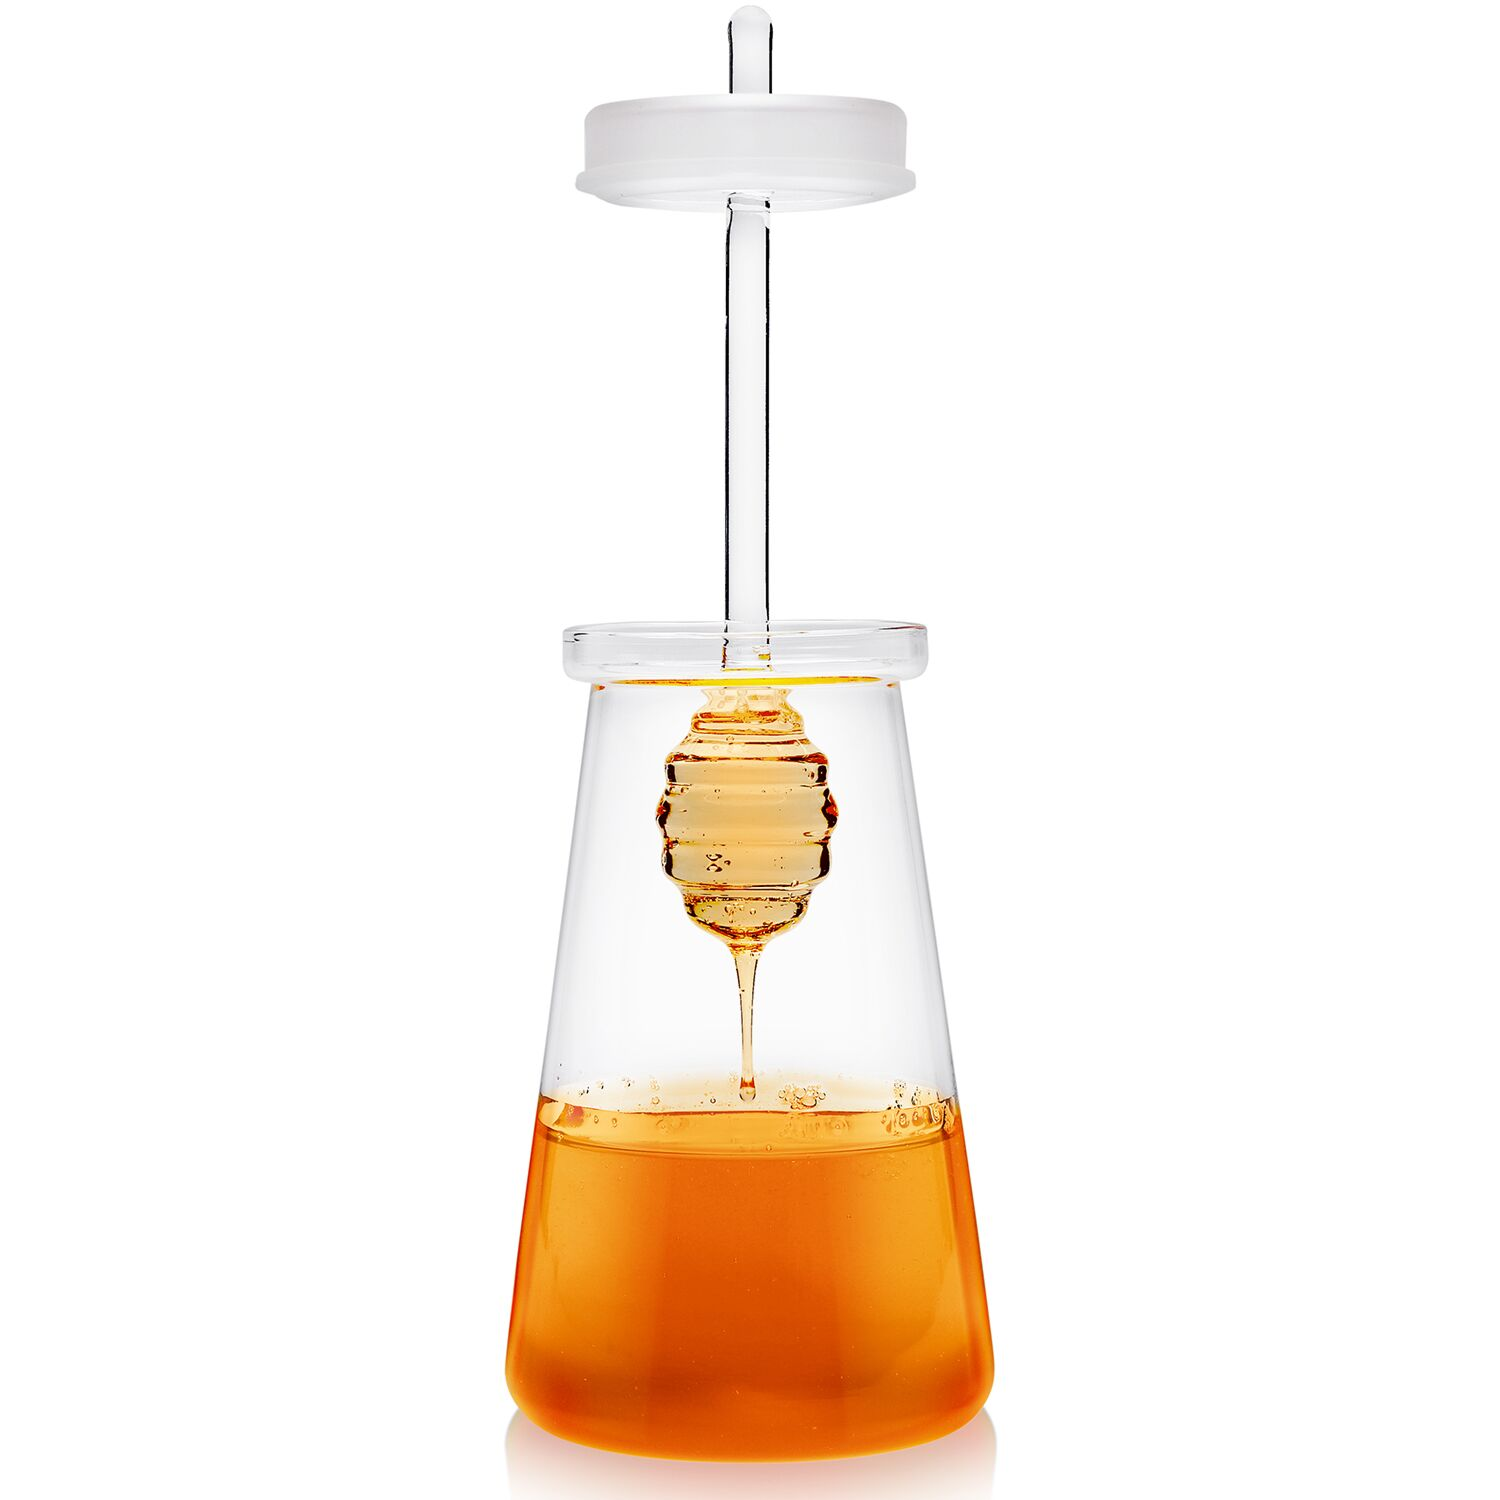 Teabloom tea accessories borosilicate glass honey jar with honeycomb dipper